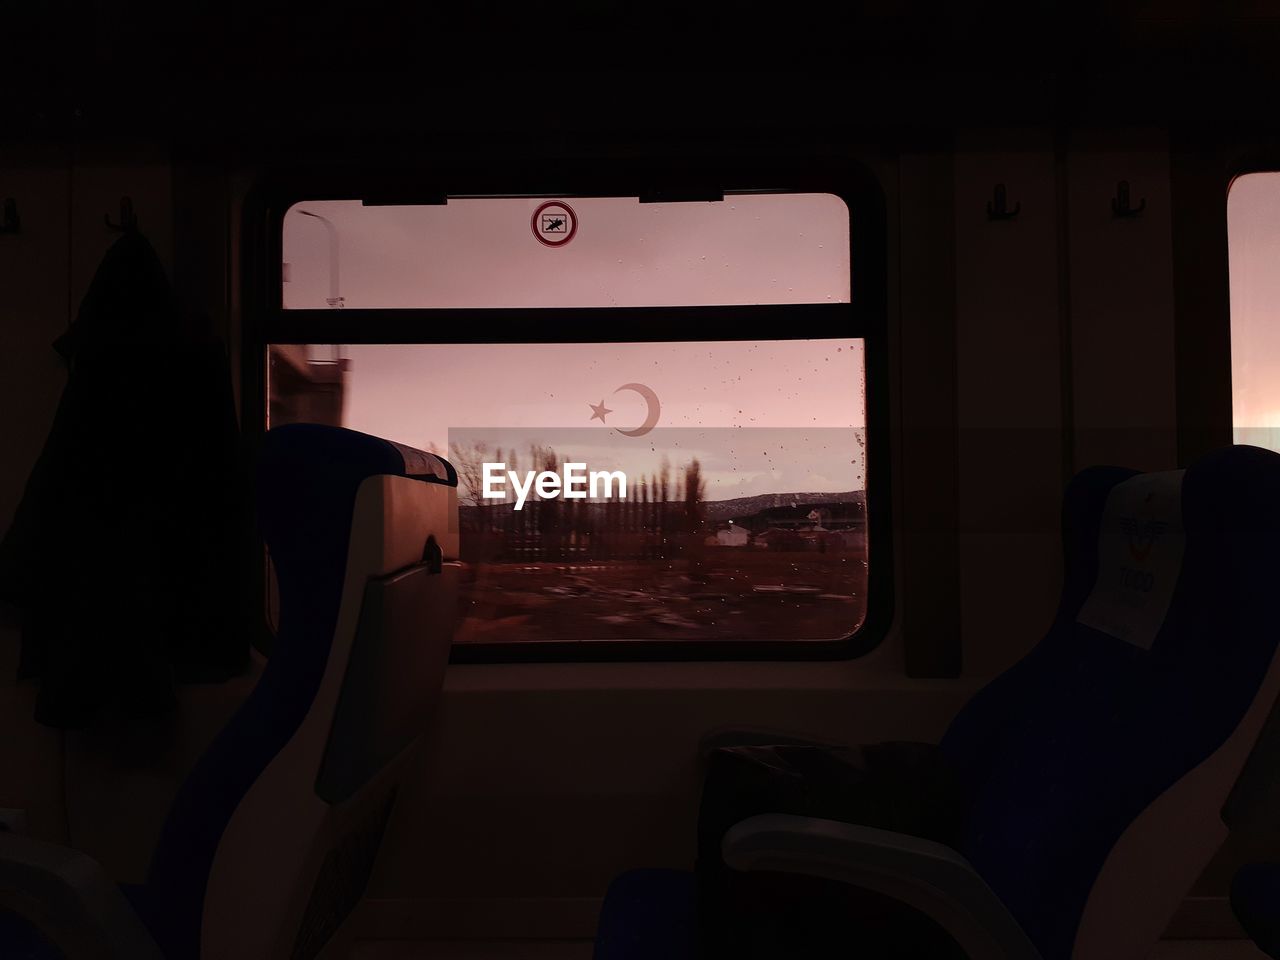 View of train through window